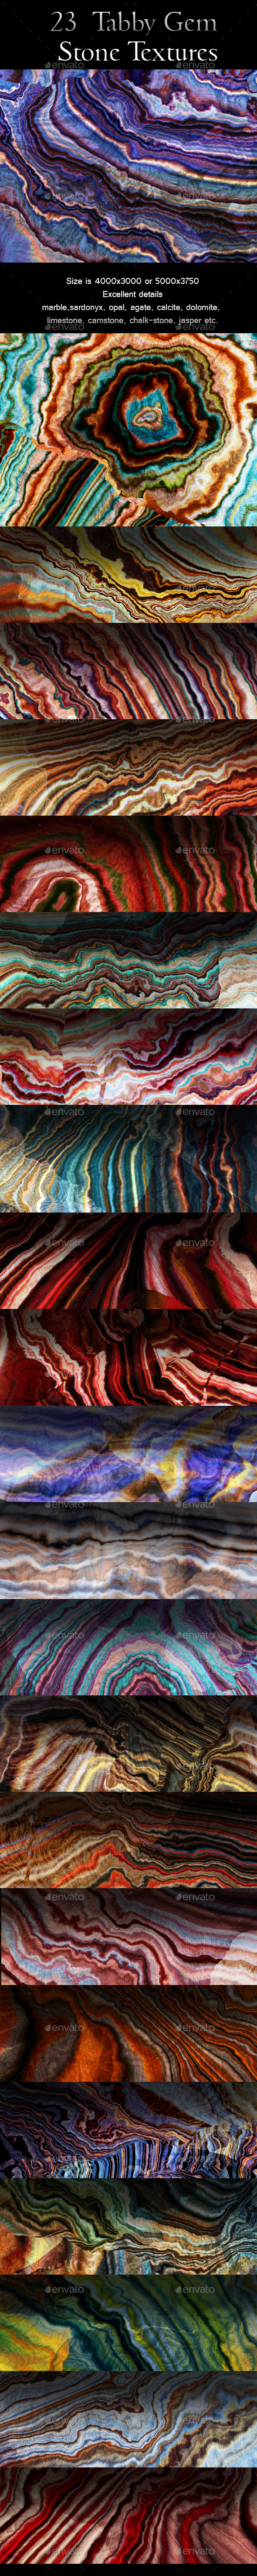 23 Tabby Onyx Gem Stone Textures - High Resolution JPG Files